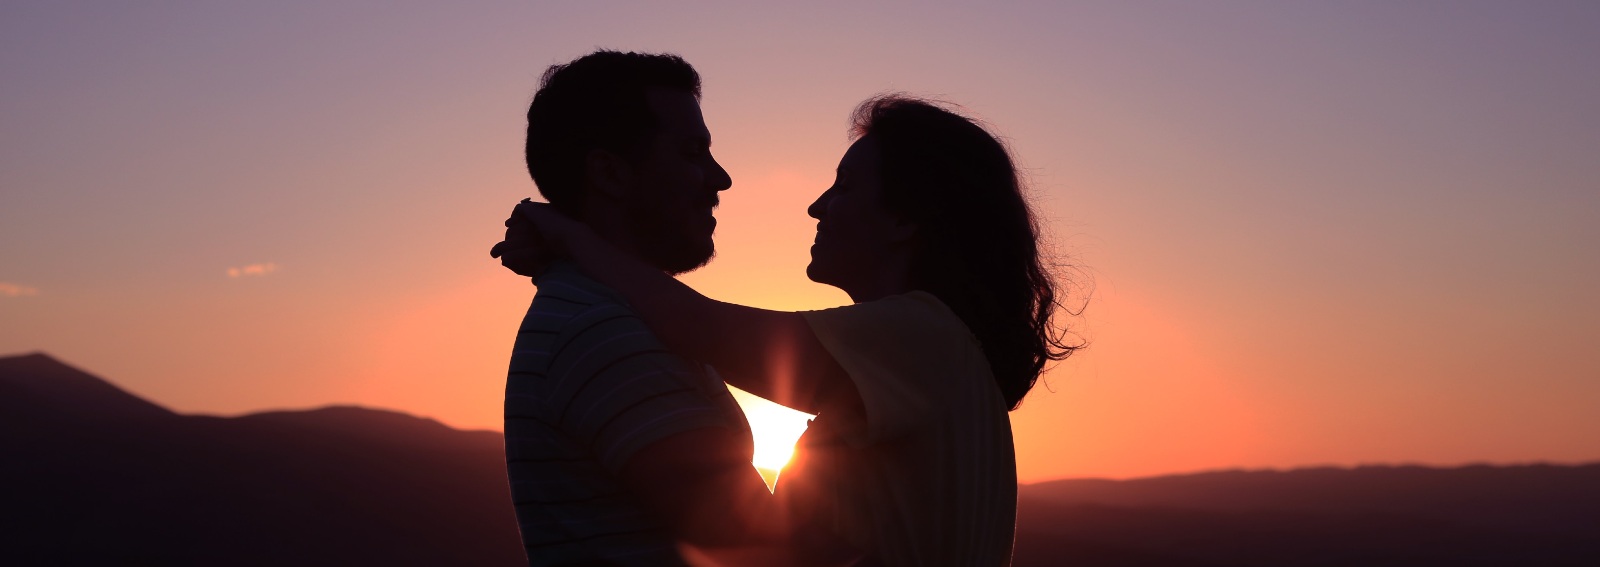 summer-love-couple-baby-fun-sunset-relationship